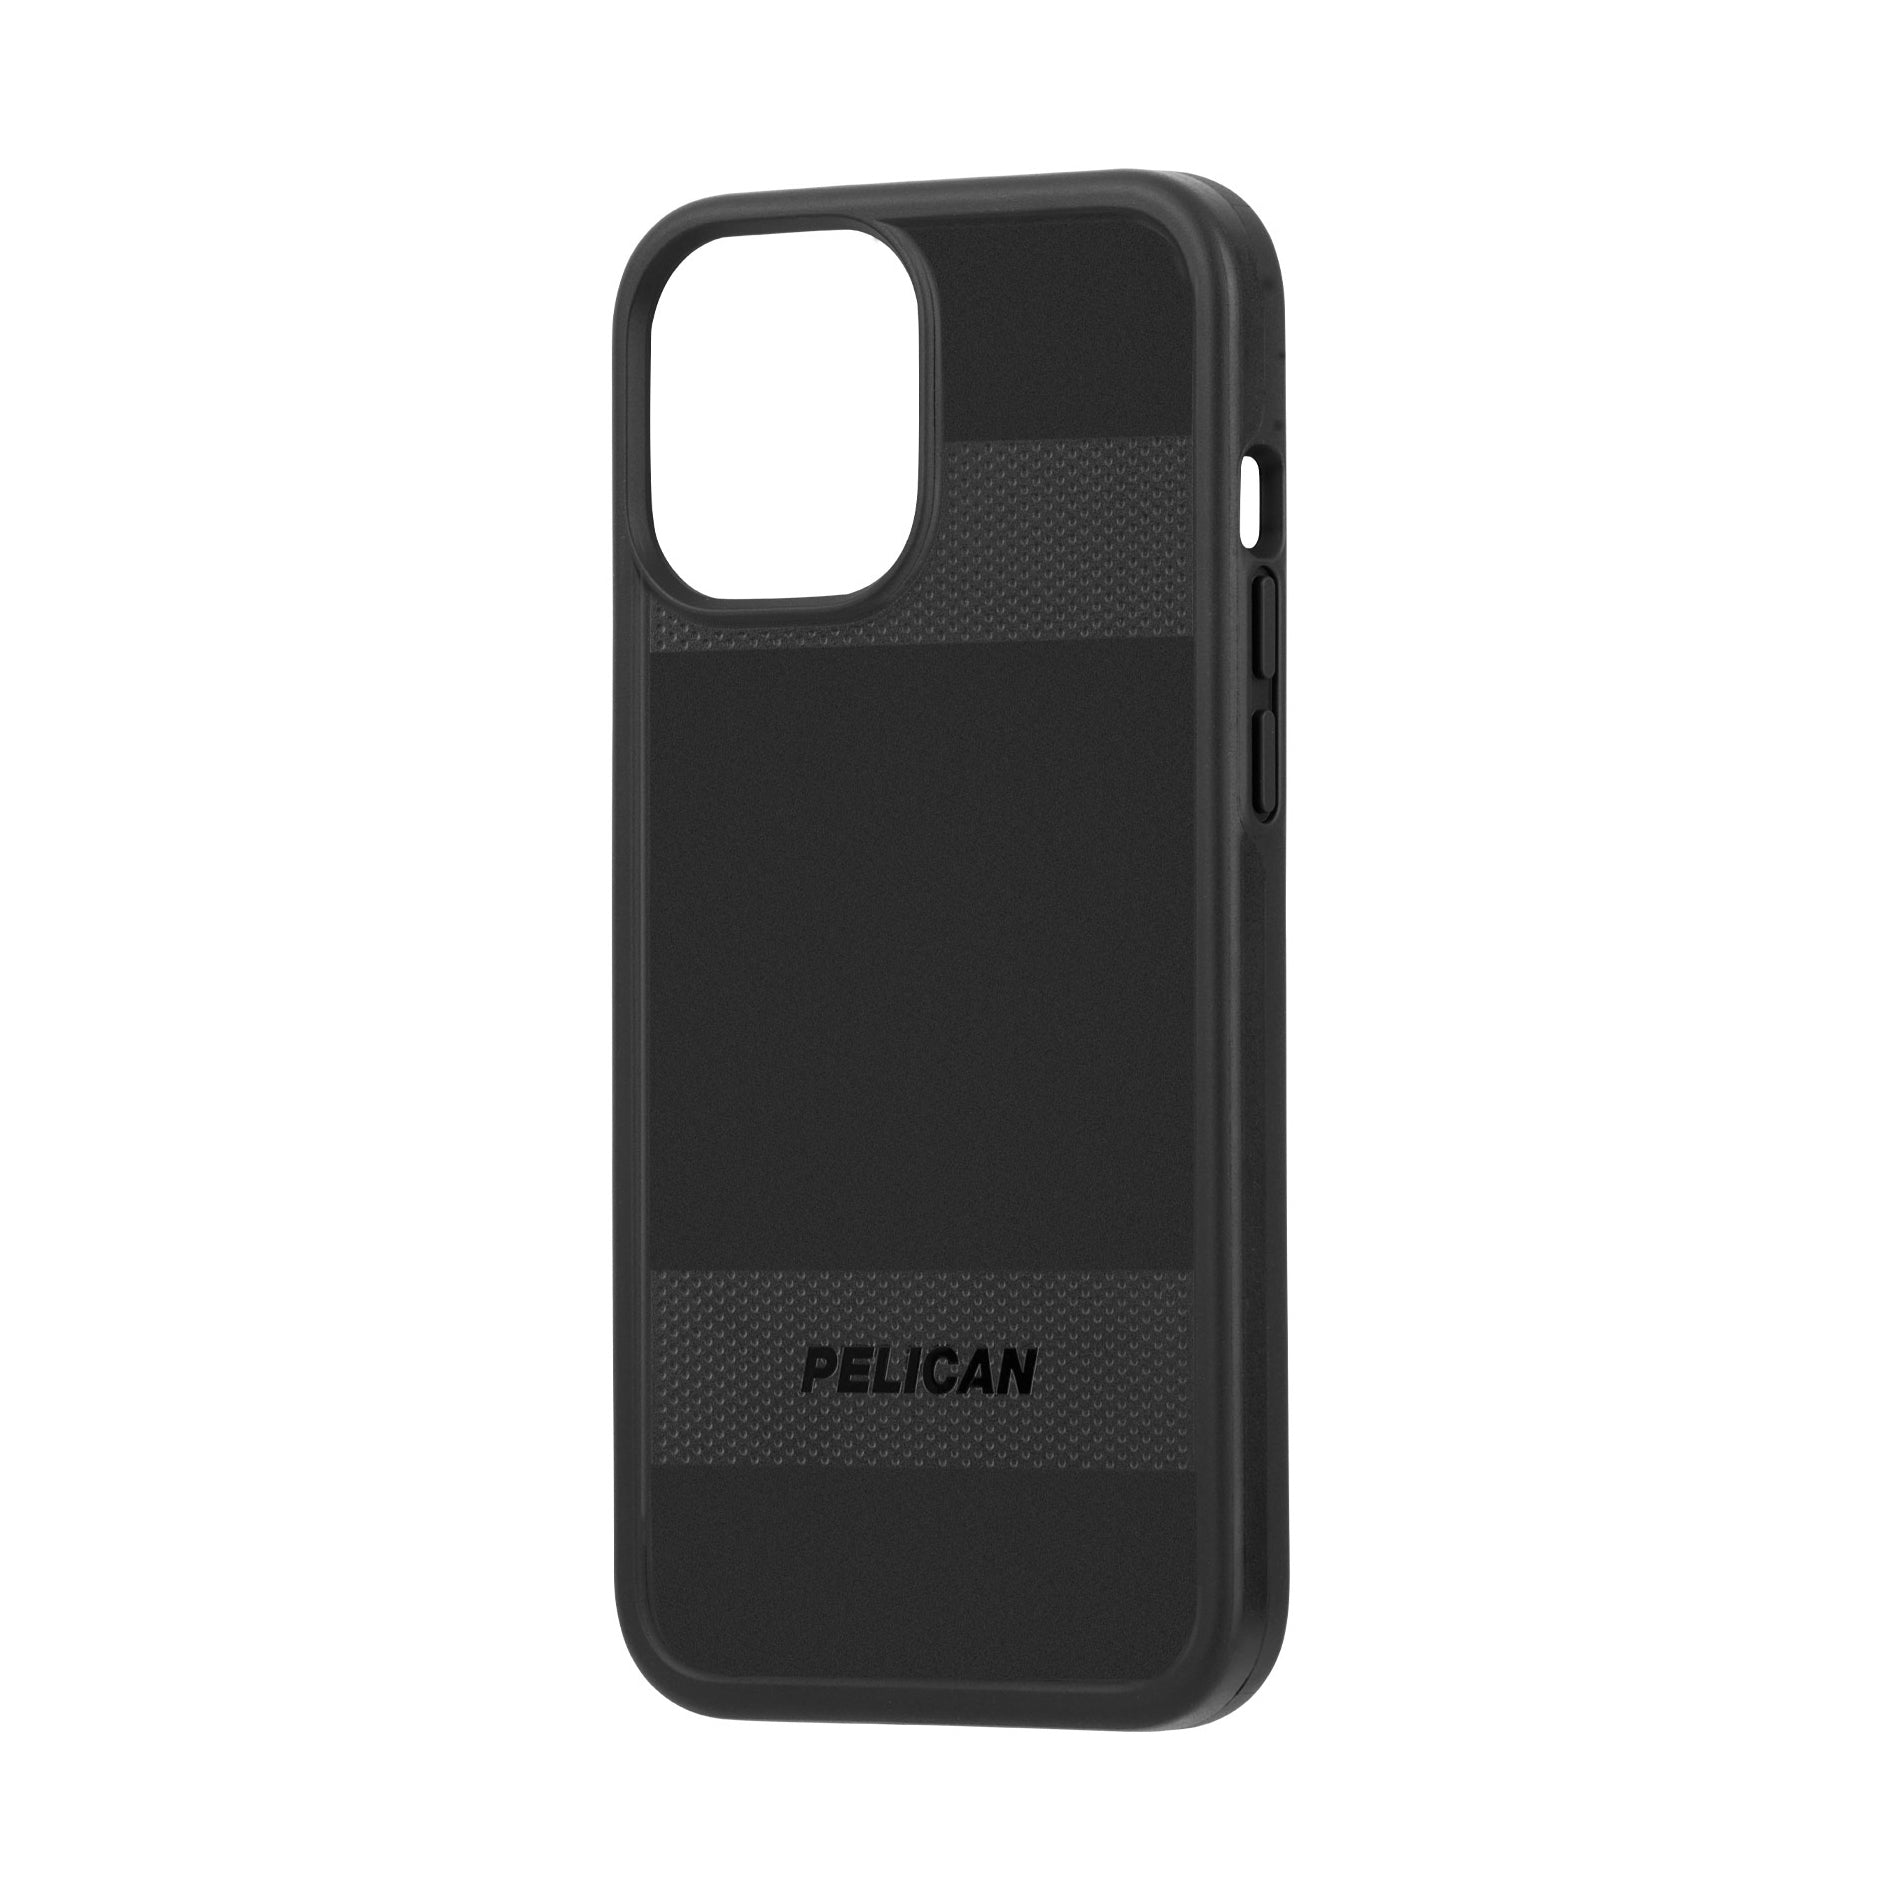 Pelican Protector Slim Rugged Case For iPhone iPhone 12 mini - BLACK - Mac Addict